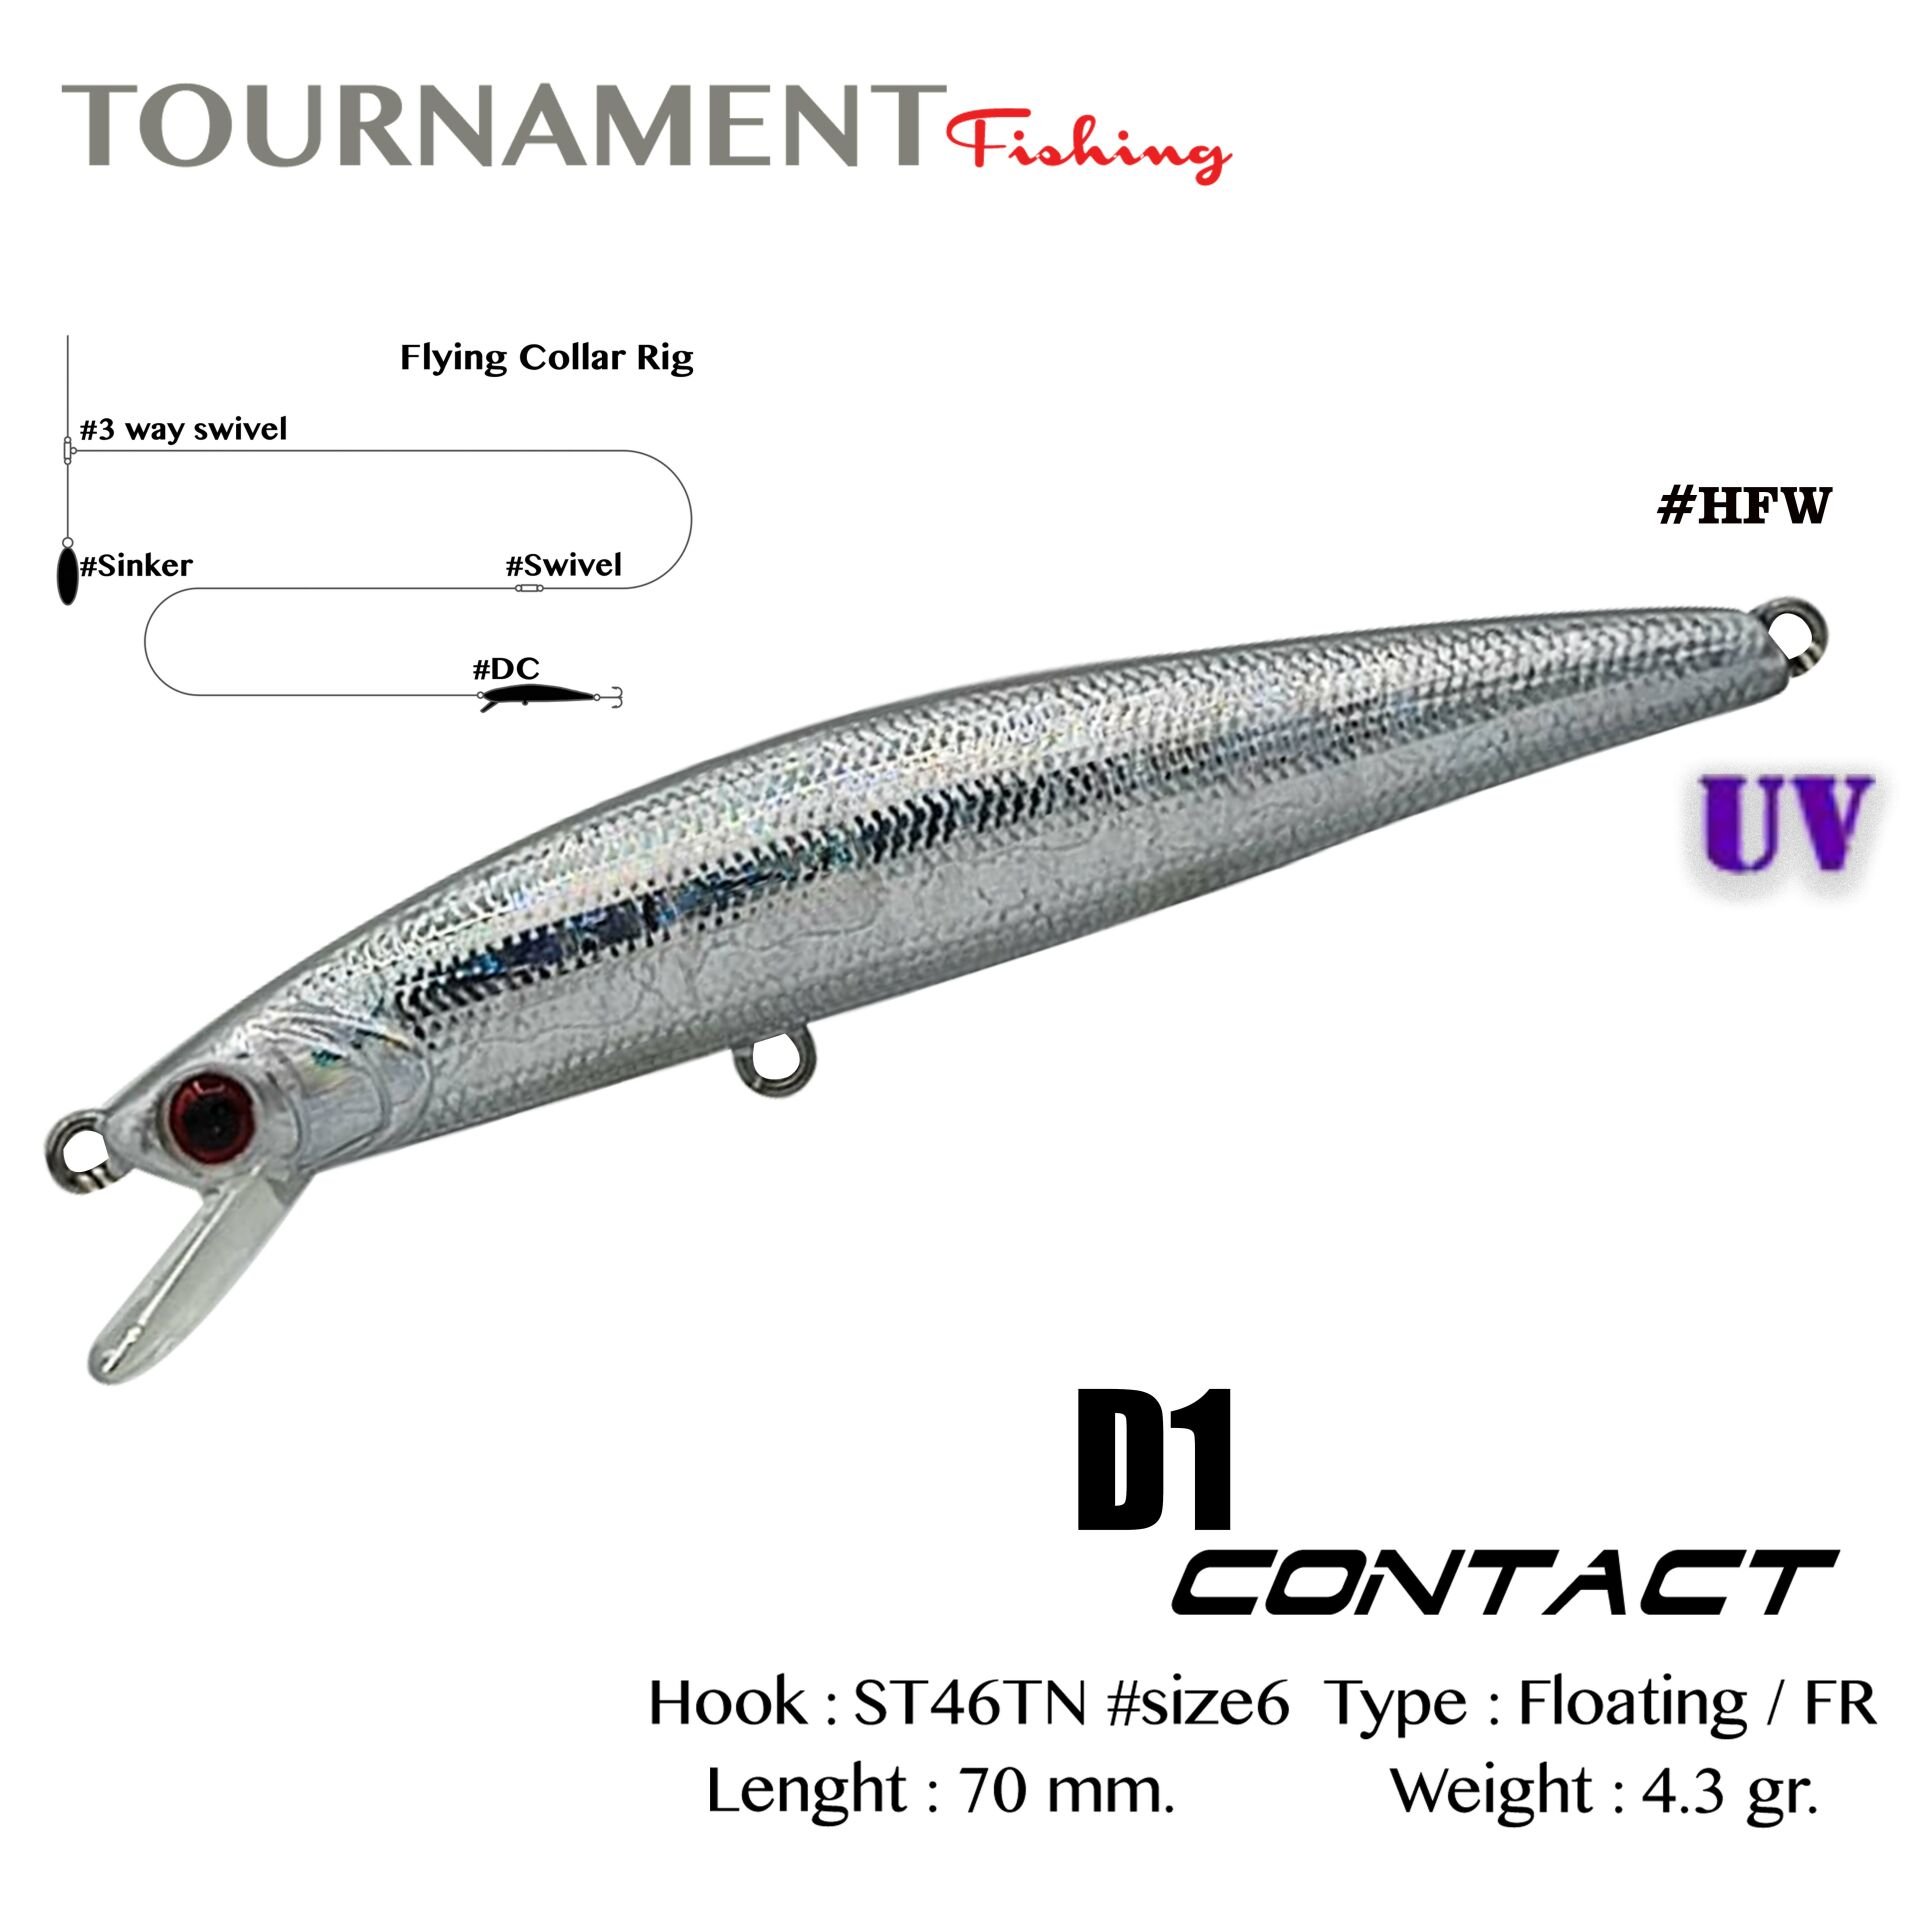 Tournament fishing D1 Contact 70 F 70 mm 4.3 gr #HFW